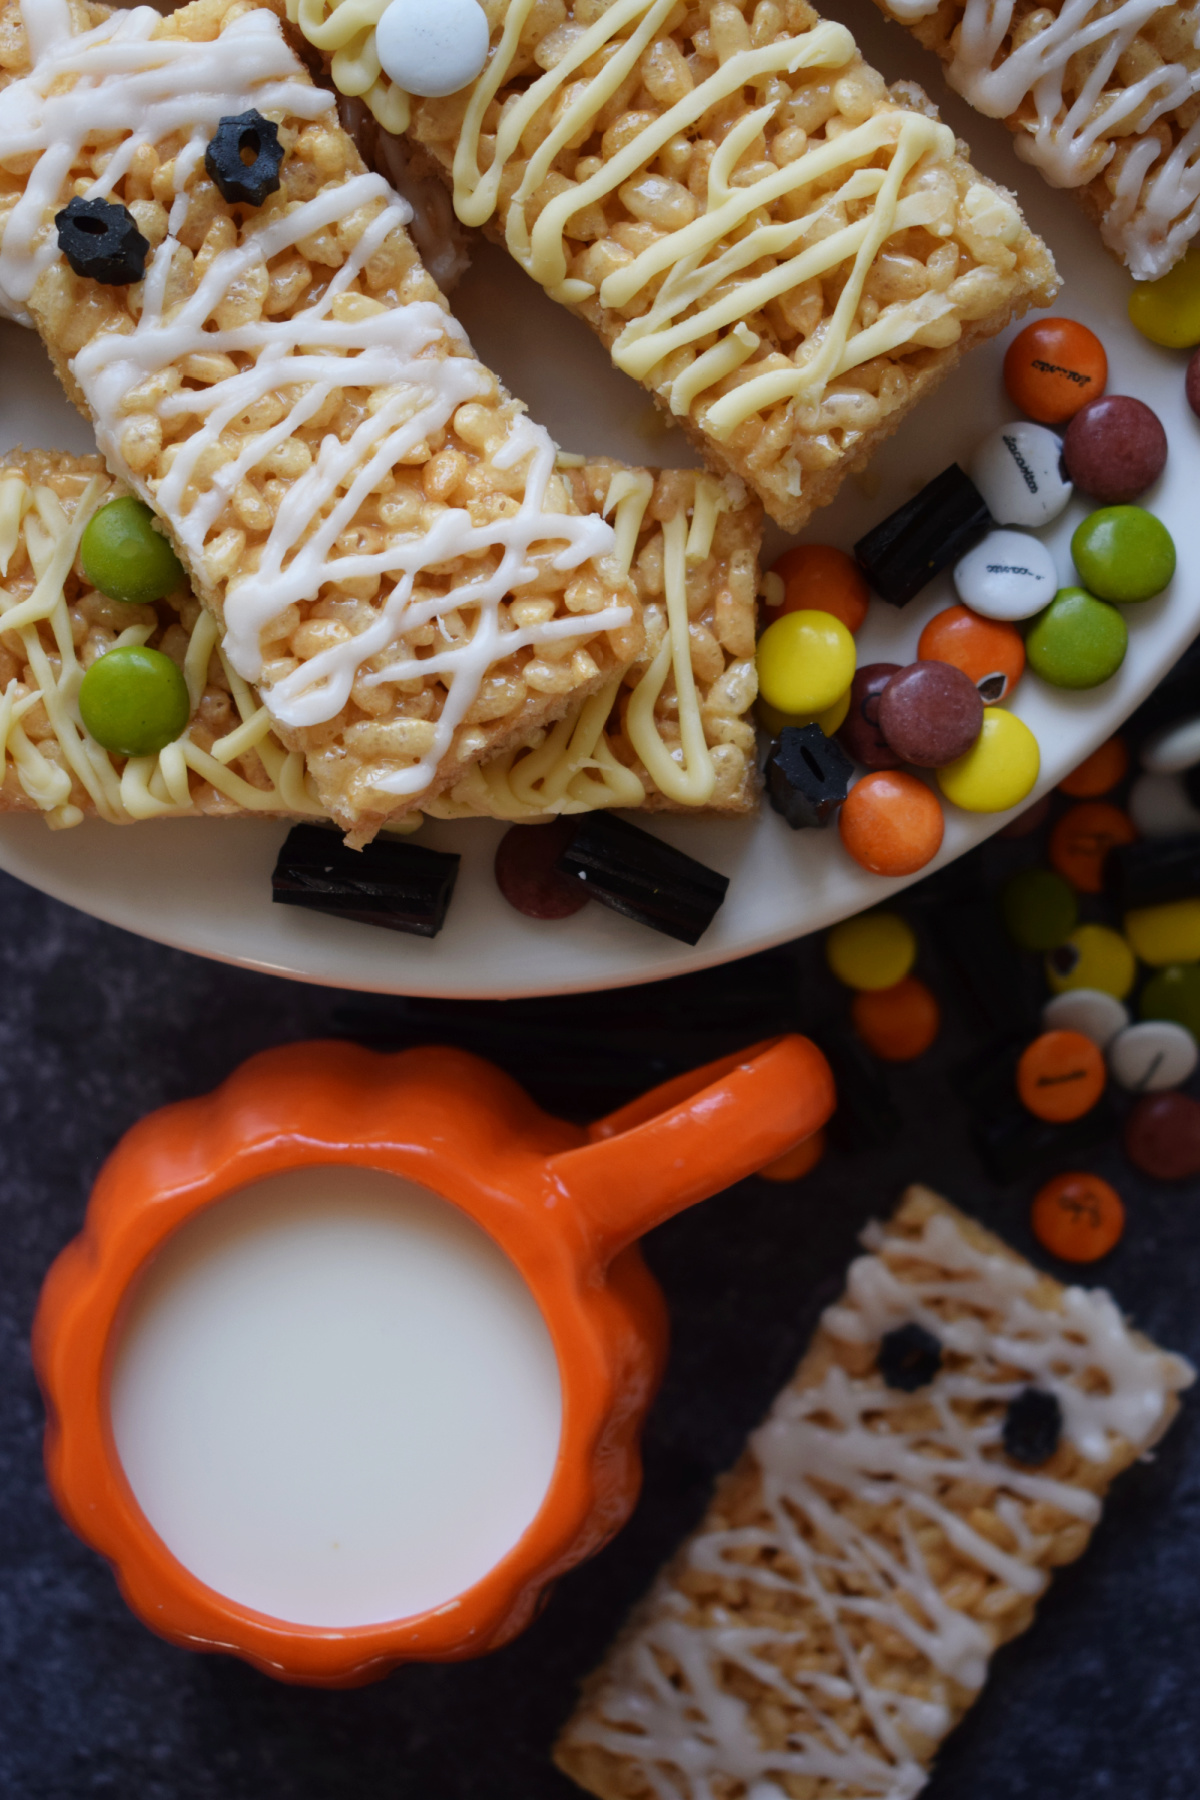 Mummy Rice Krispie Treats  Fun & Easy Halloween Food Idea!